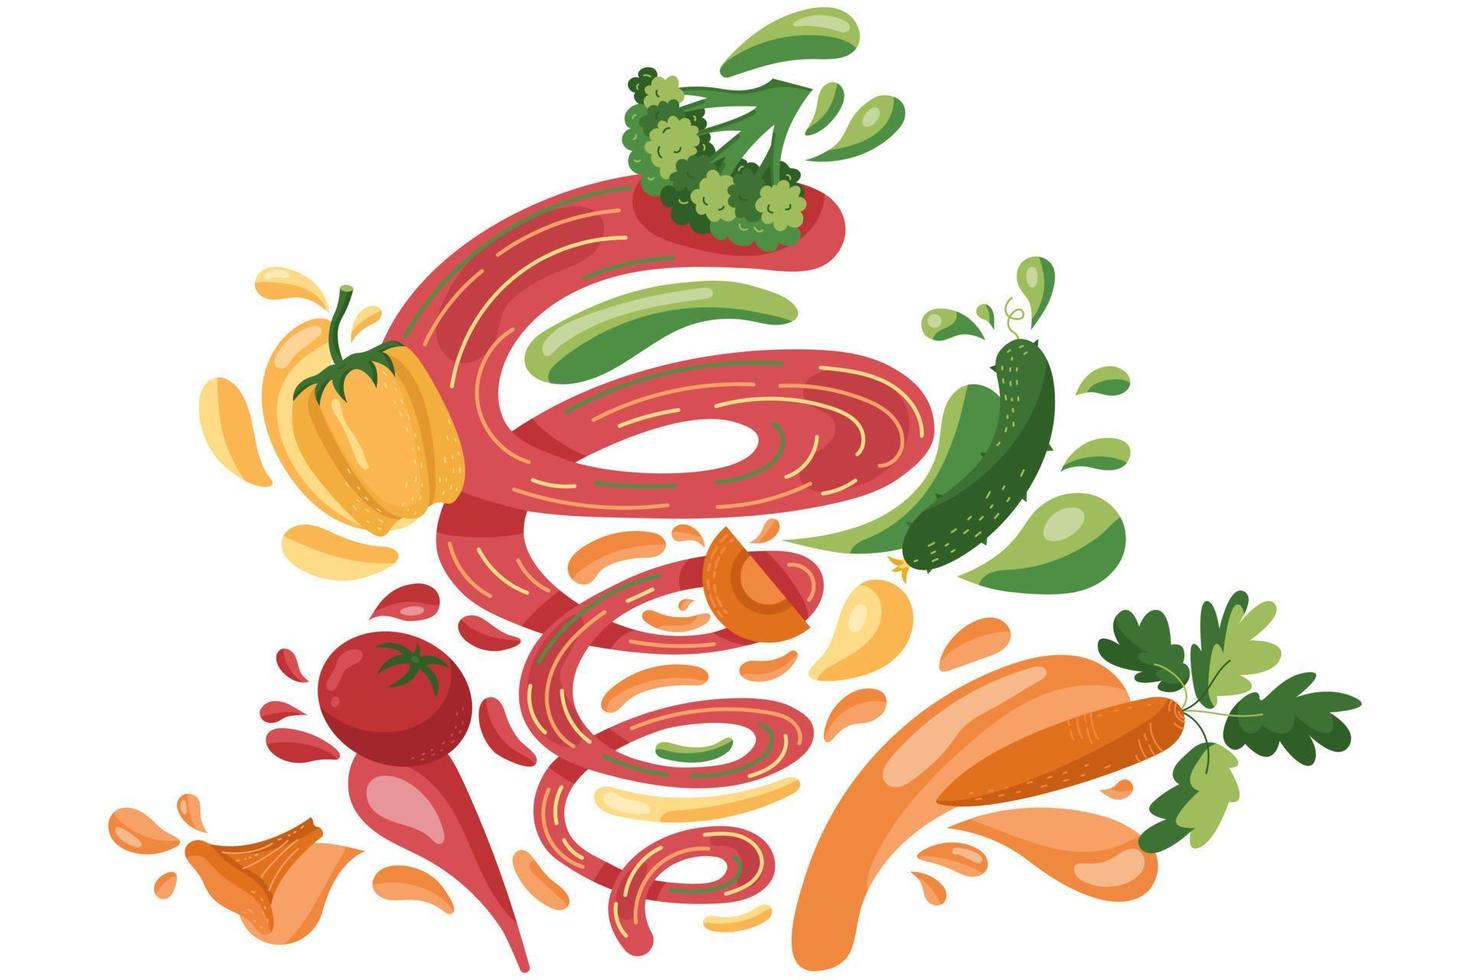 hacer batidos de verduras frescas, preparar alimentos orgánicos saludables. zanahoria, brócoli, tomate, champiñón, jugo de pepino en un estilo de dibujos animados planos. ilustración vectorial vector